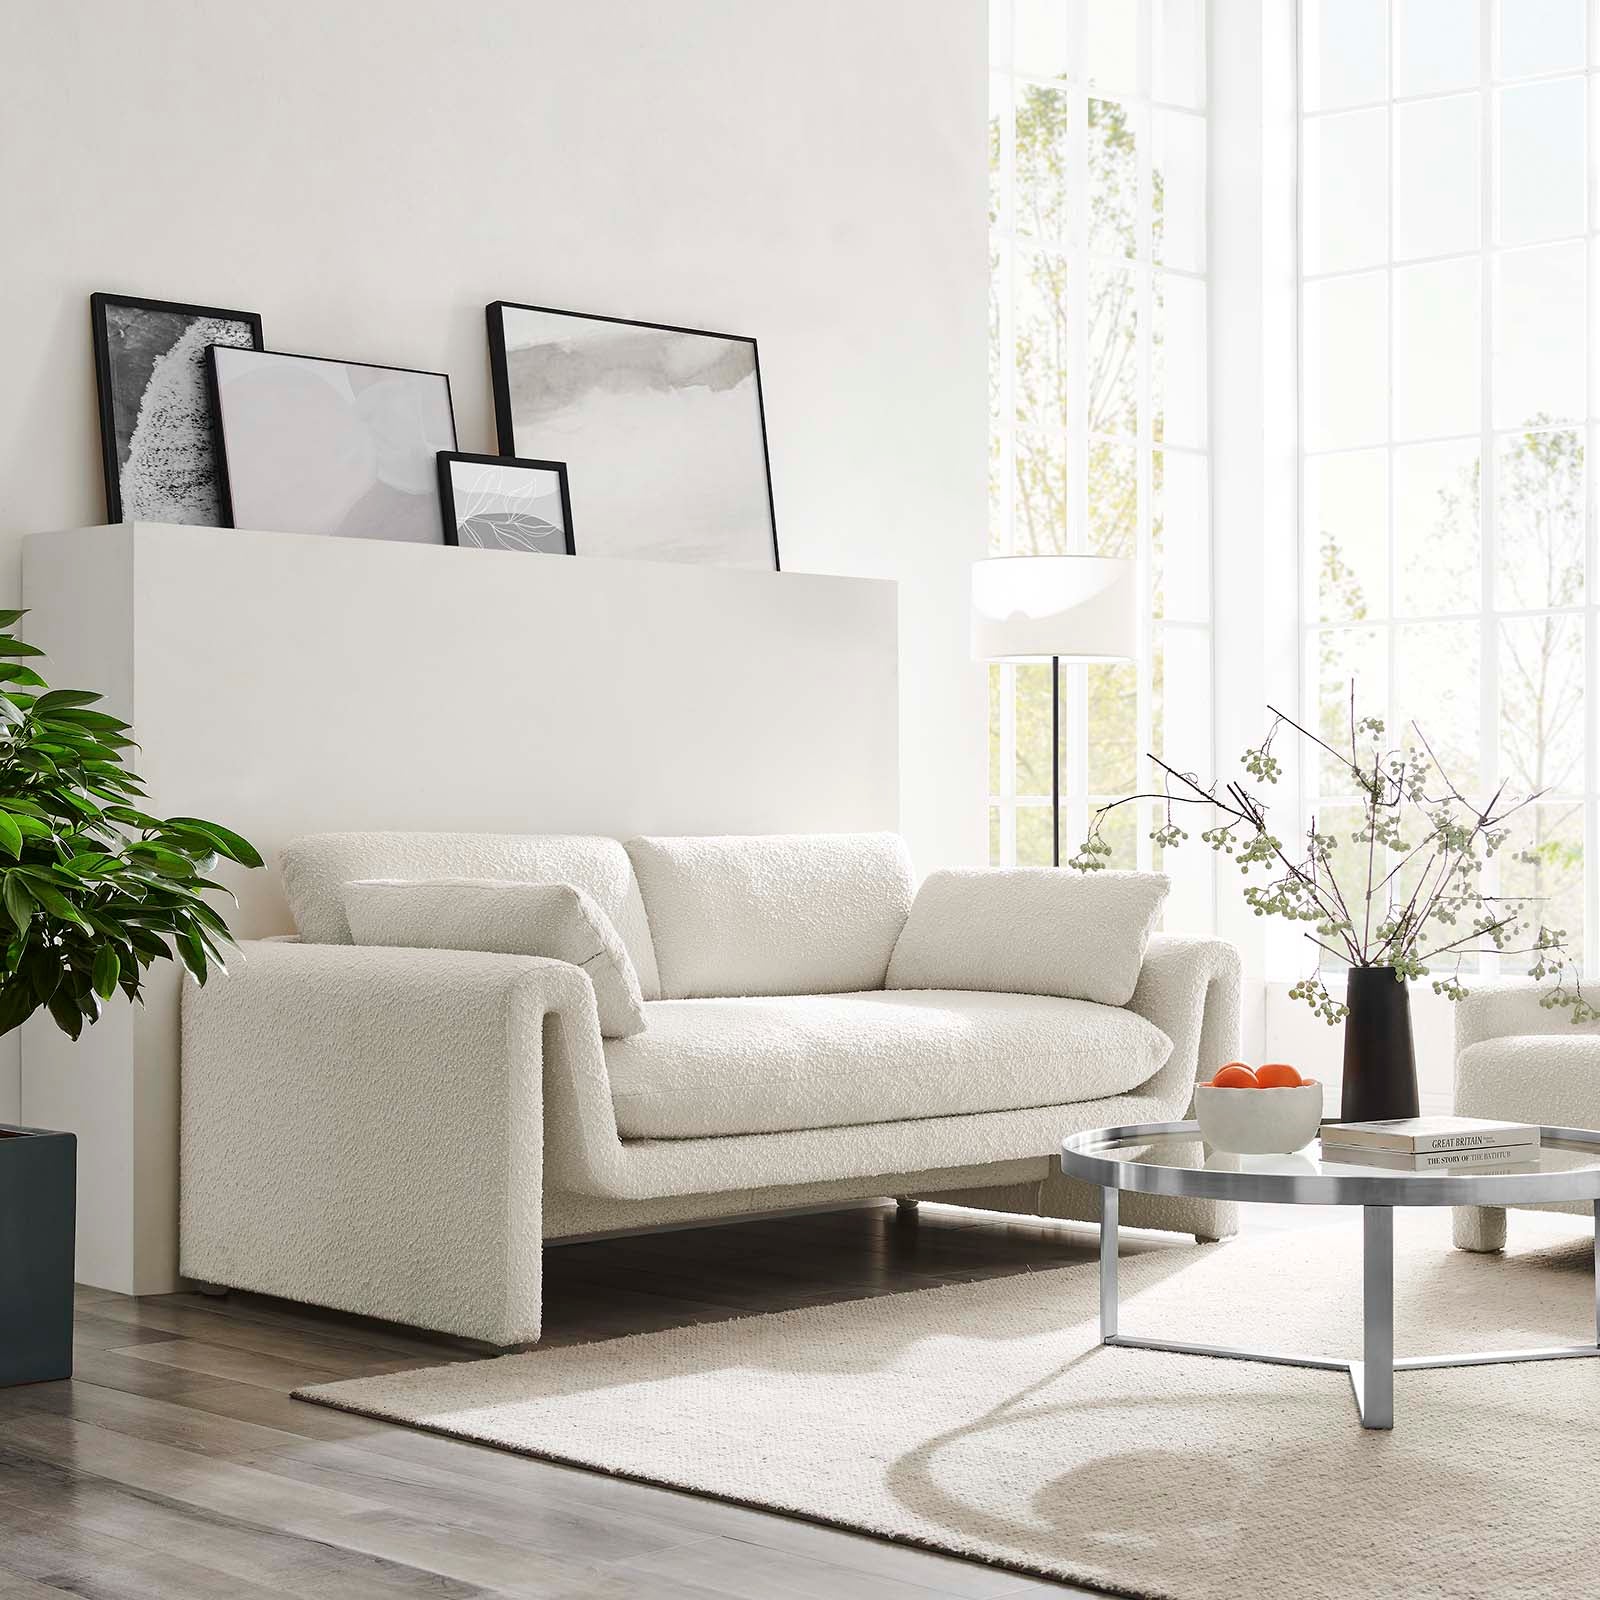 Waverly Boucle Fabric Sofa - East Shore Modern Home Furnishings